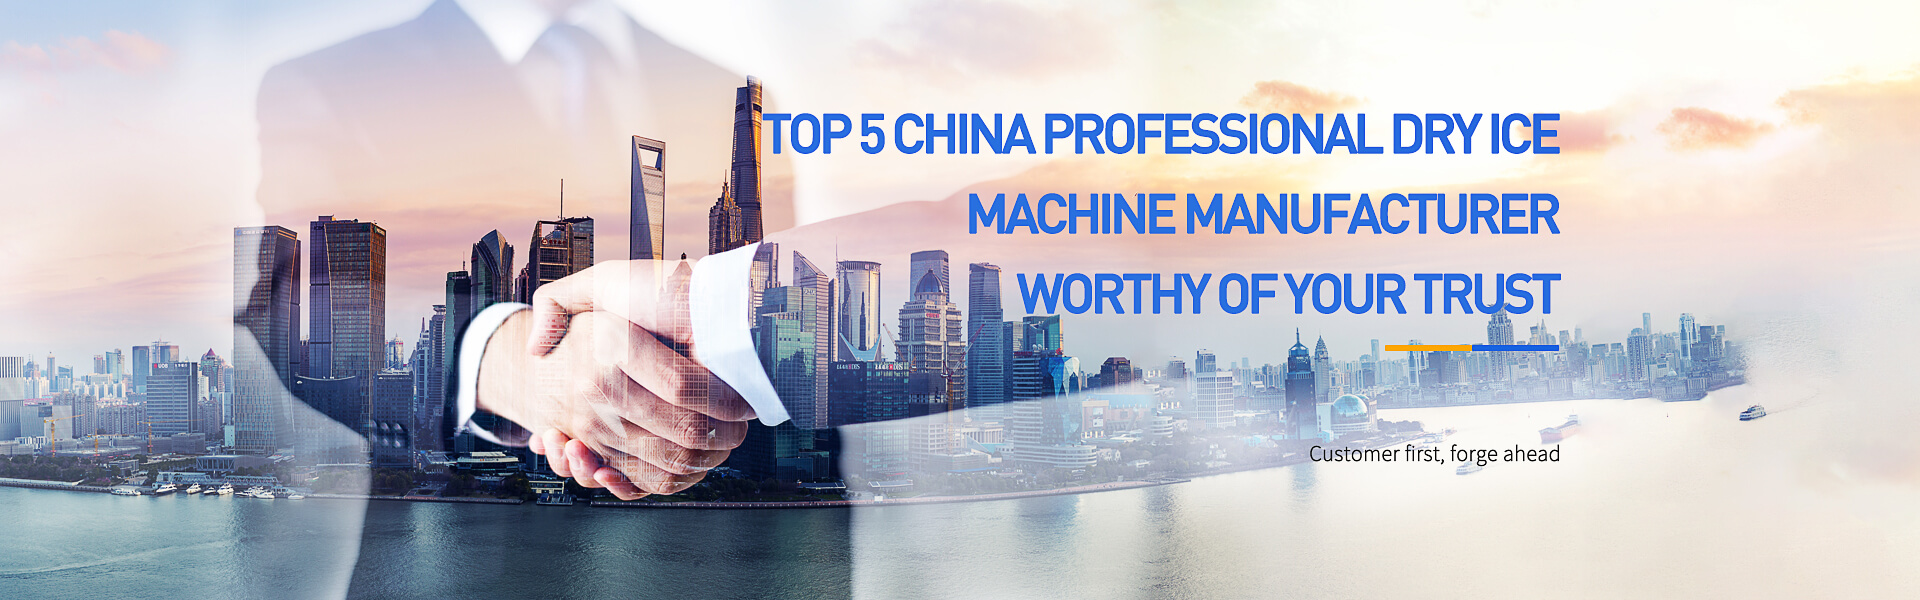 1-Top 5 China Professional Dry Ice Machine Manufacturer